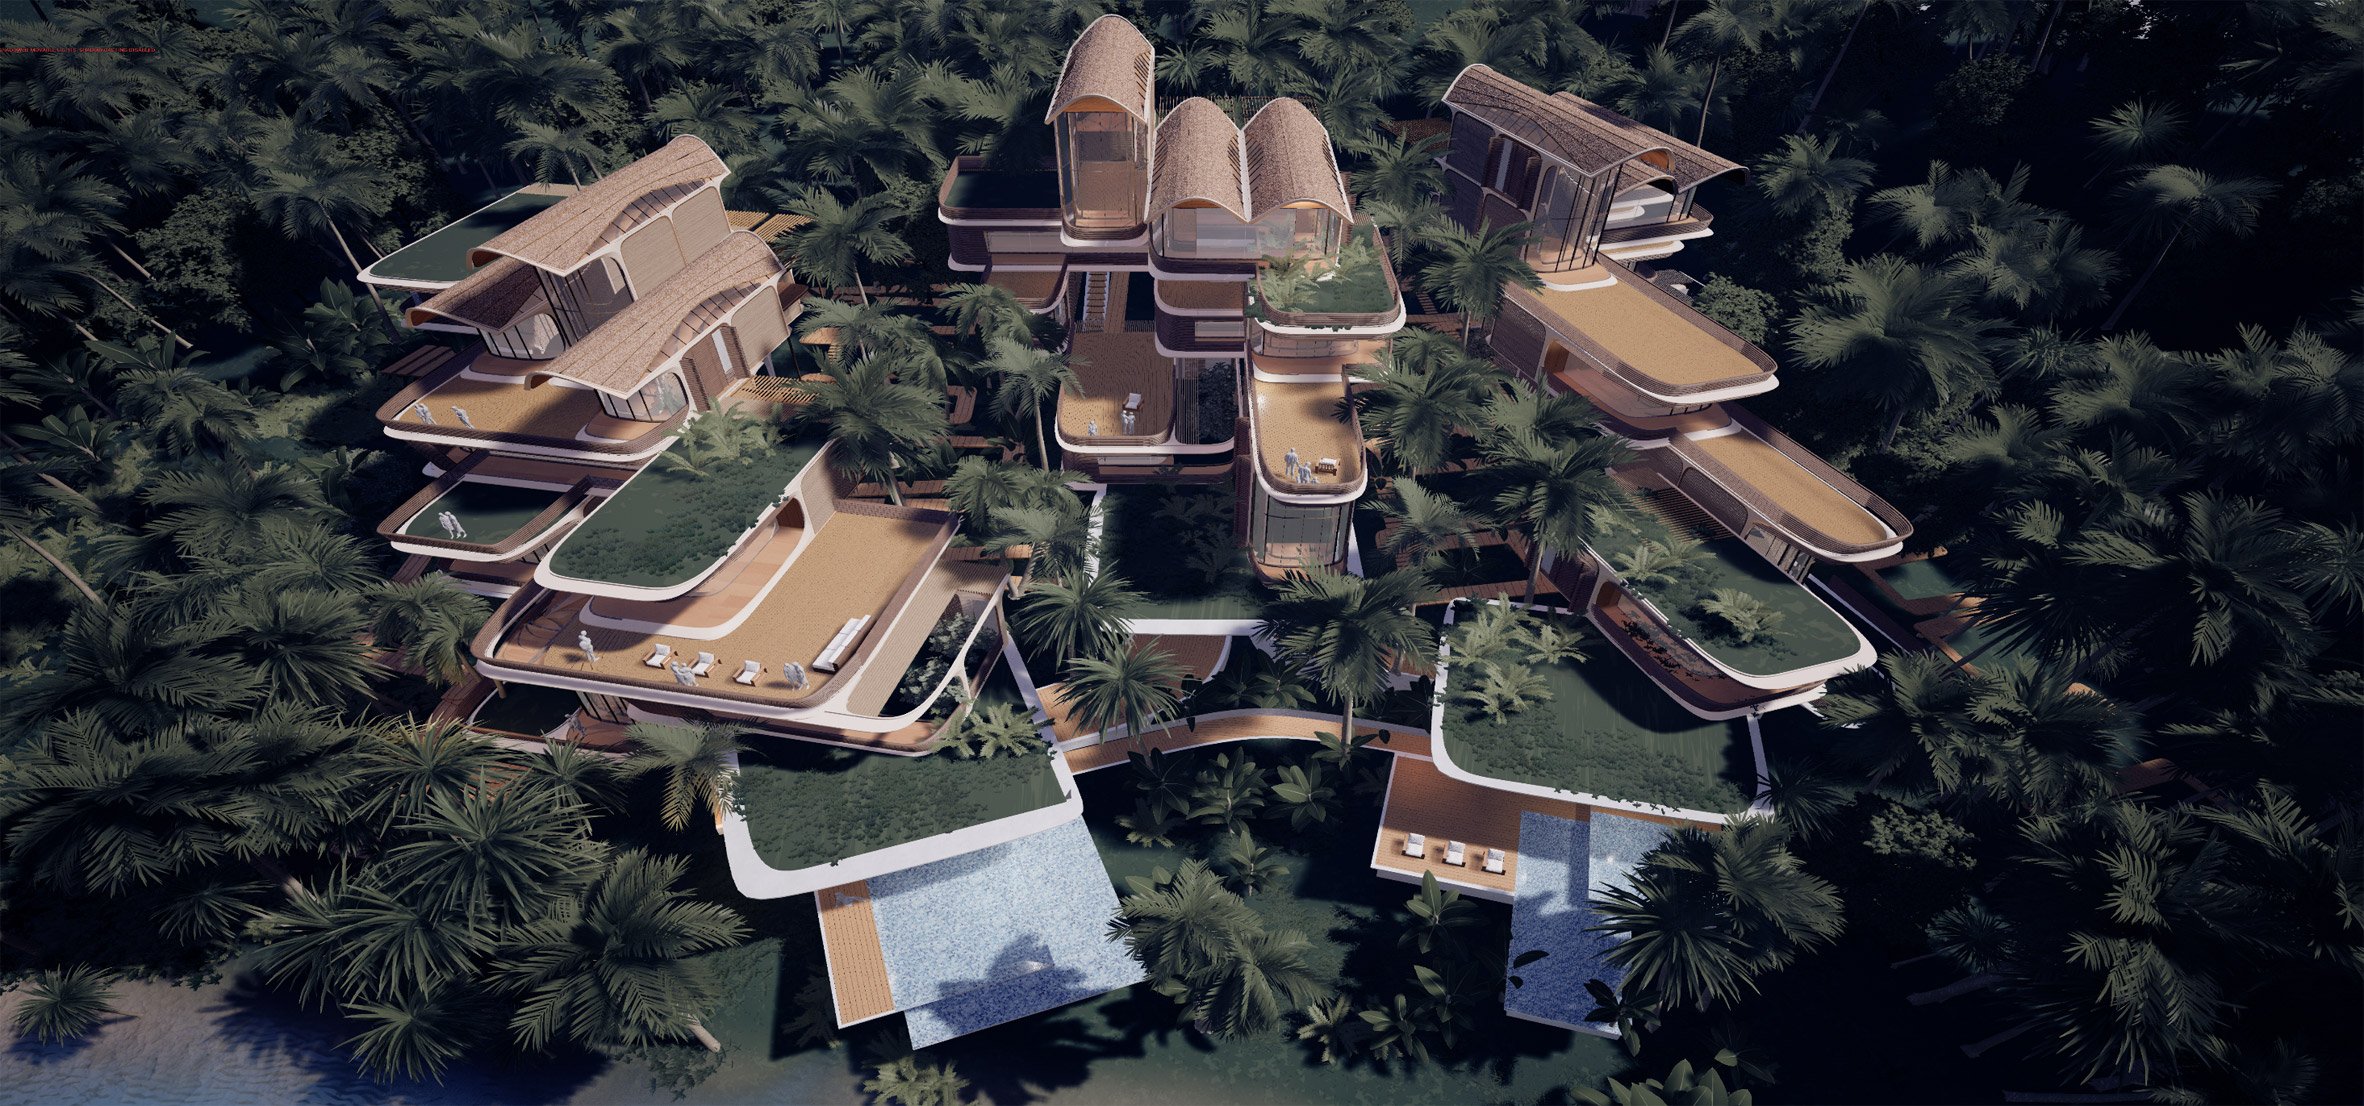 Roatán Próspera Residences by Zaha Hadid Architects